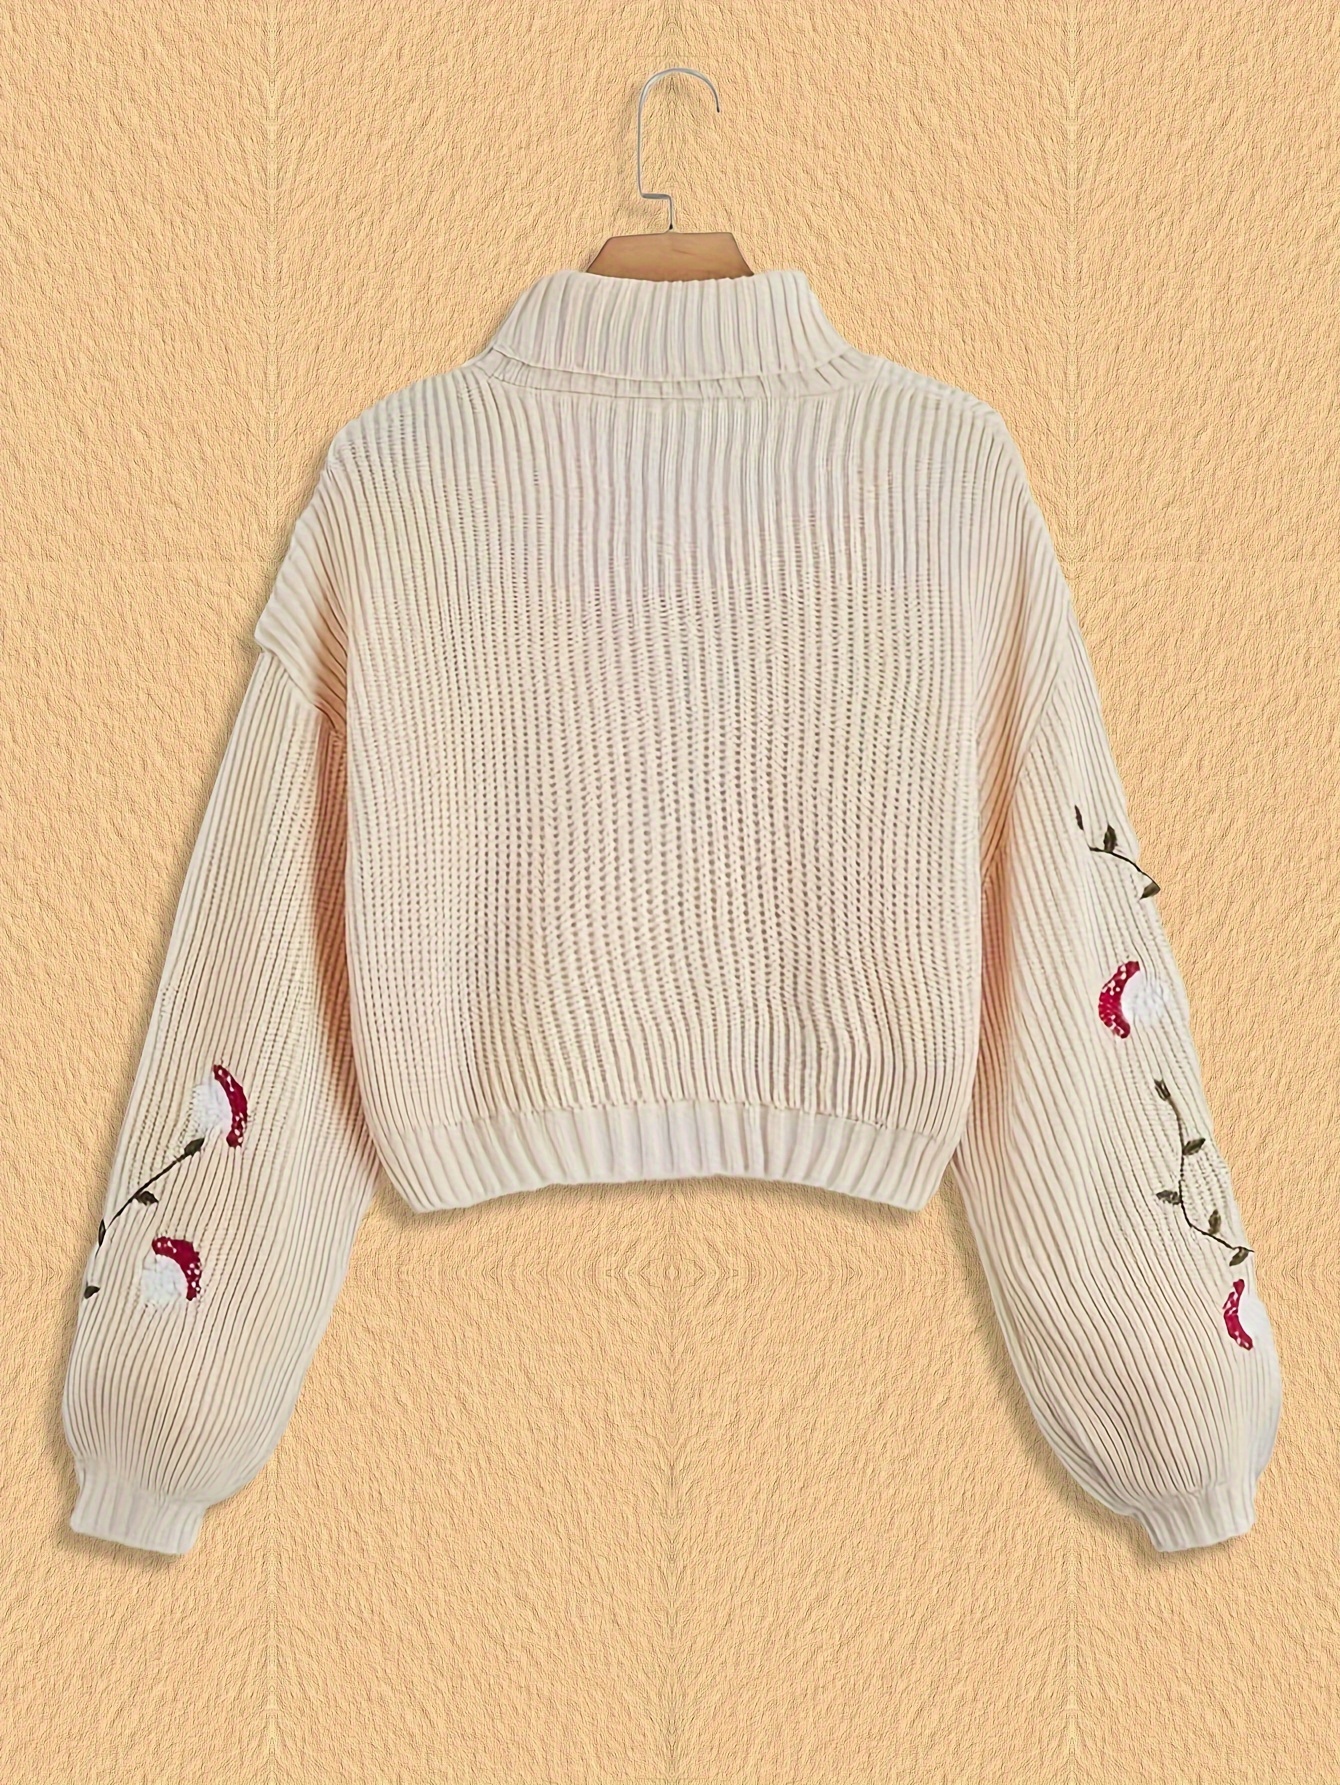 Japanese Kawaii Loose and cute cloud print long sleeve sweater top sweater